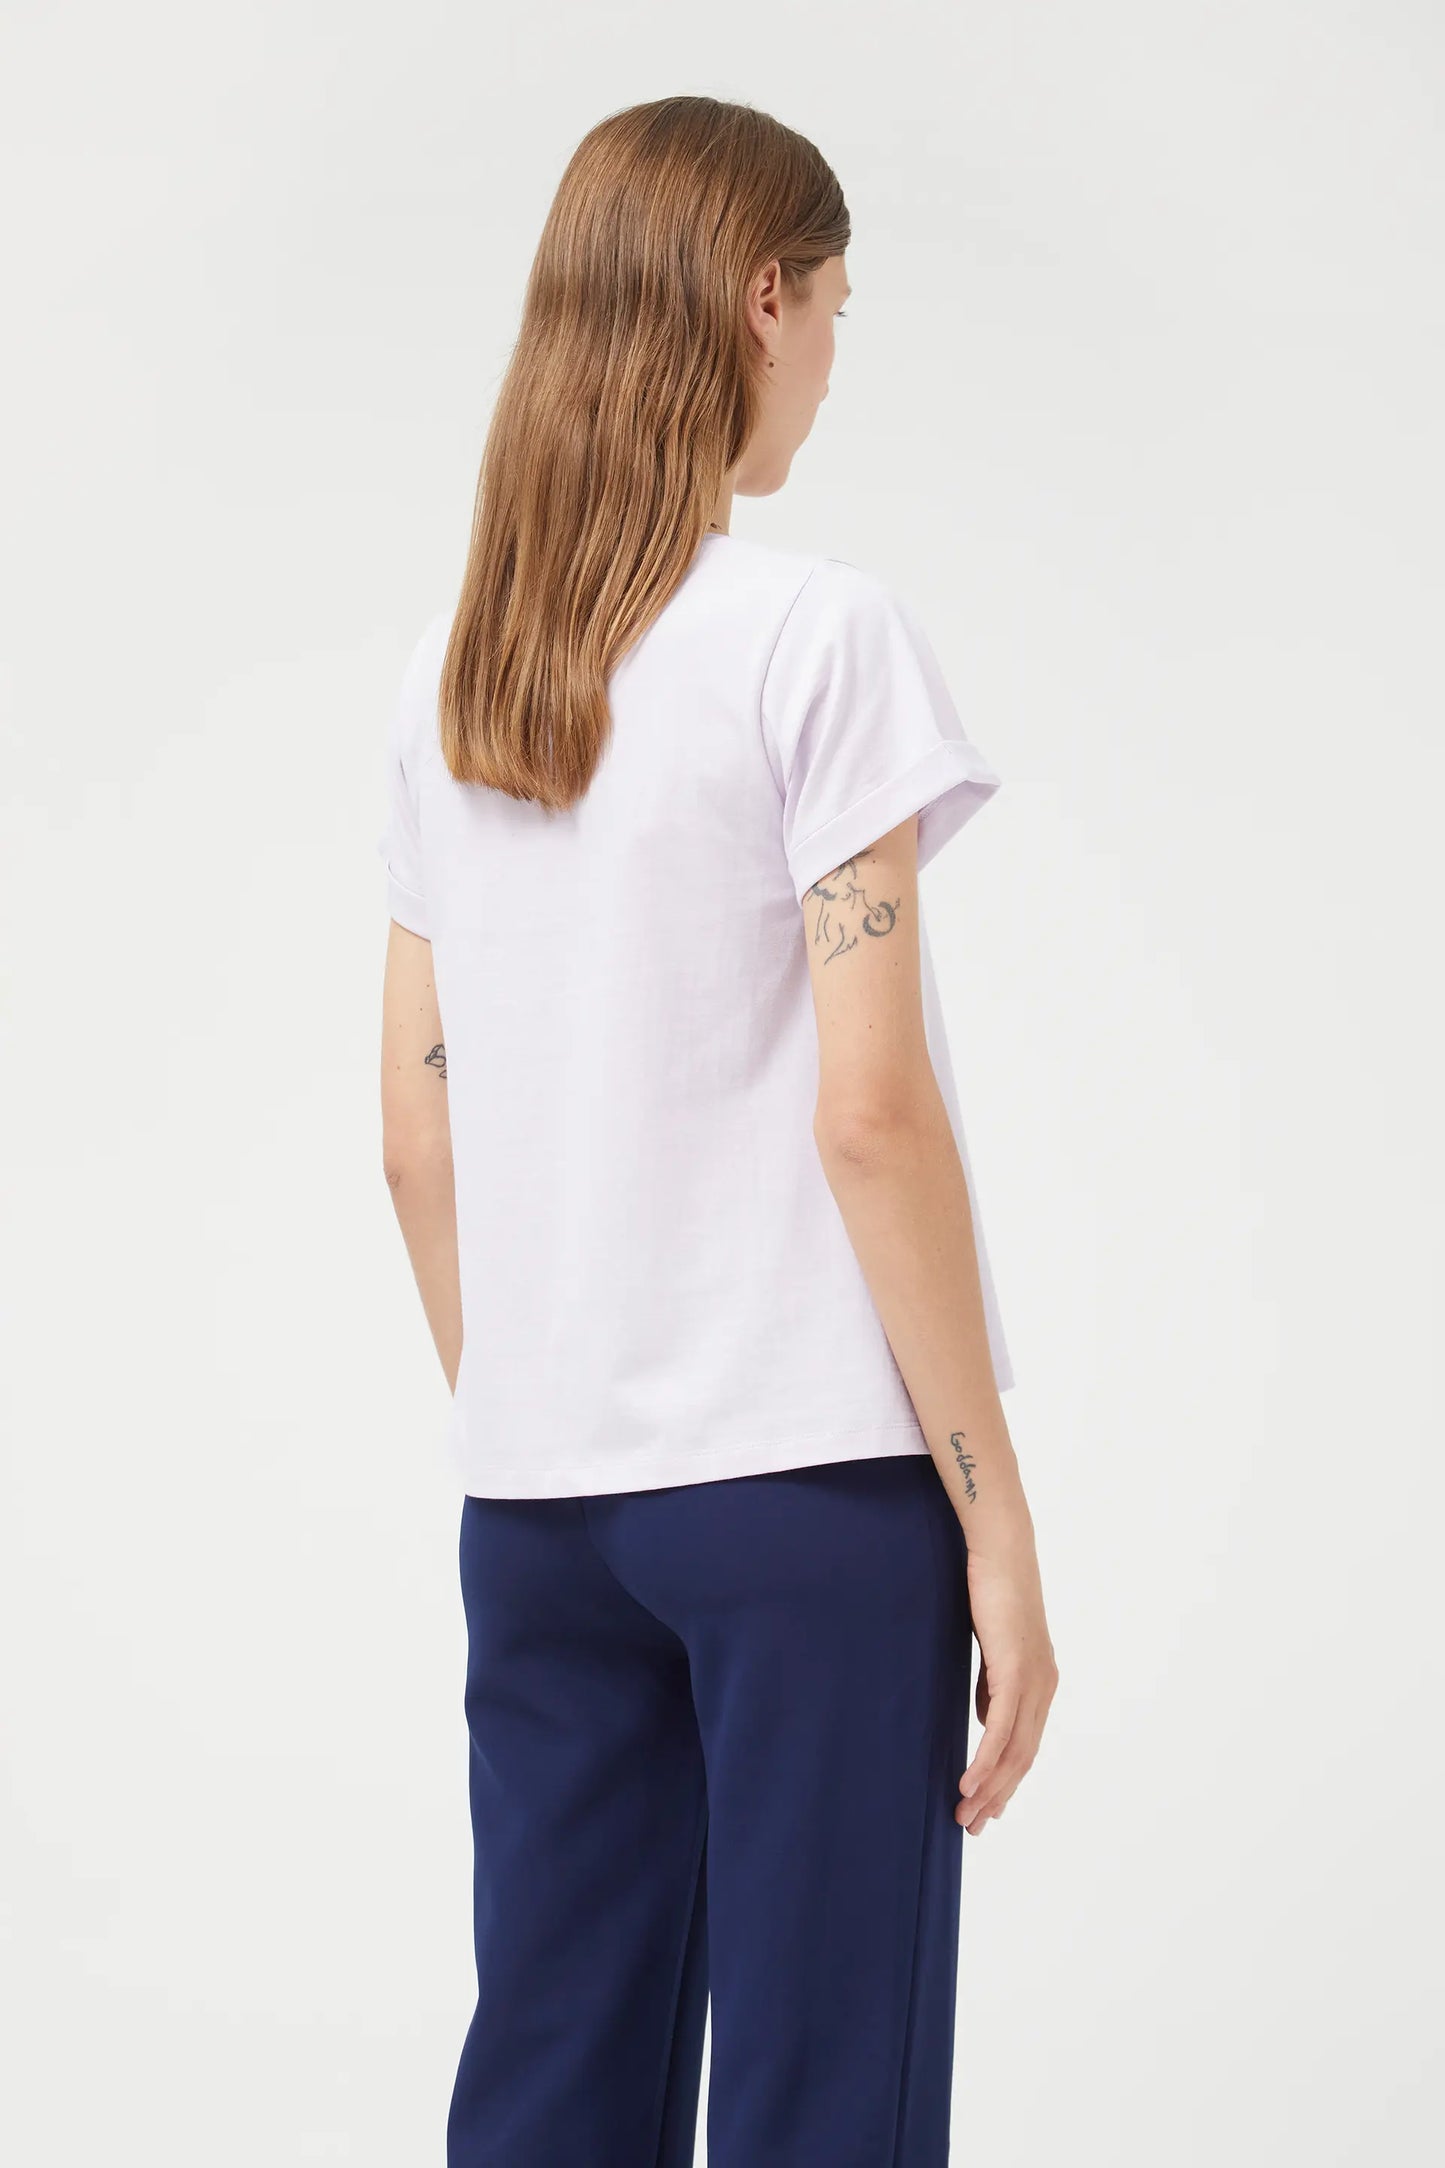 Camiseta print pimiento lila